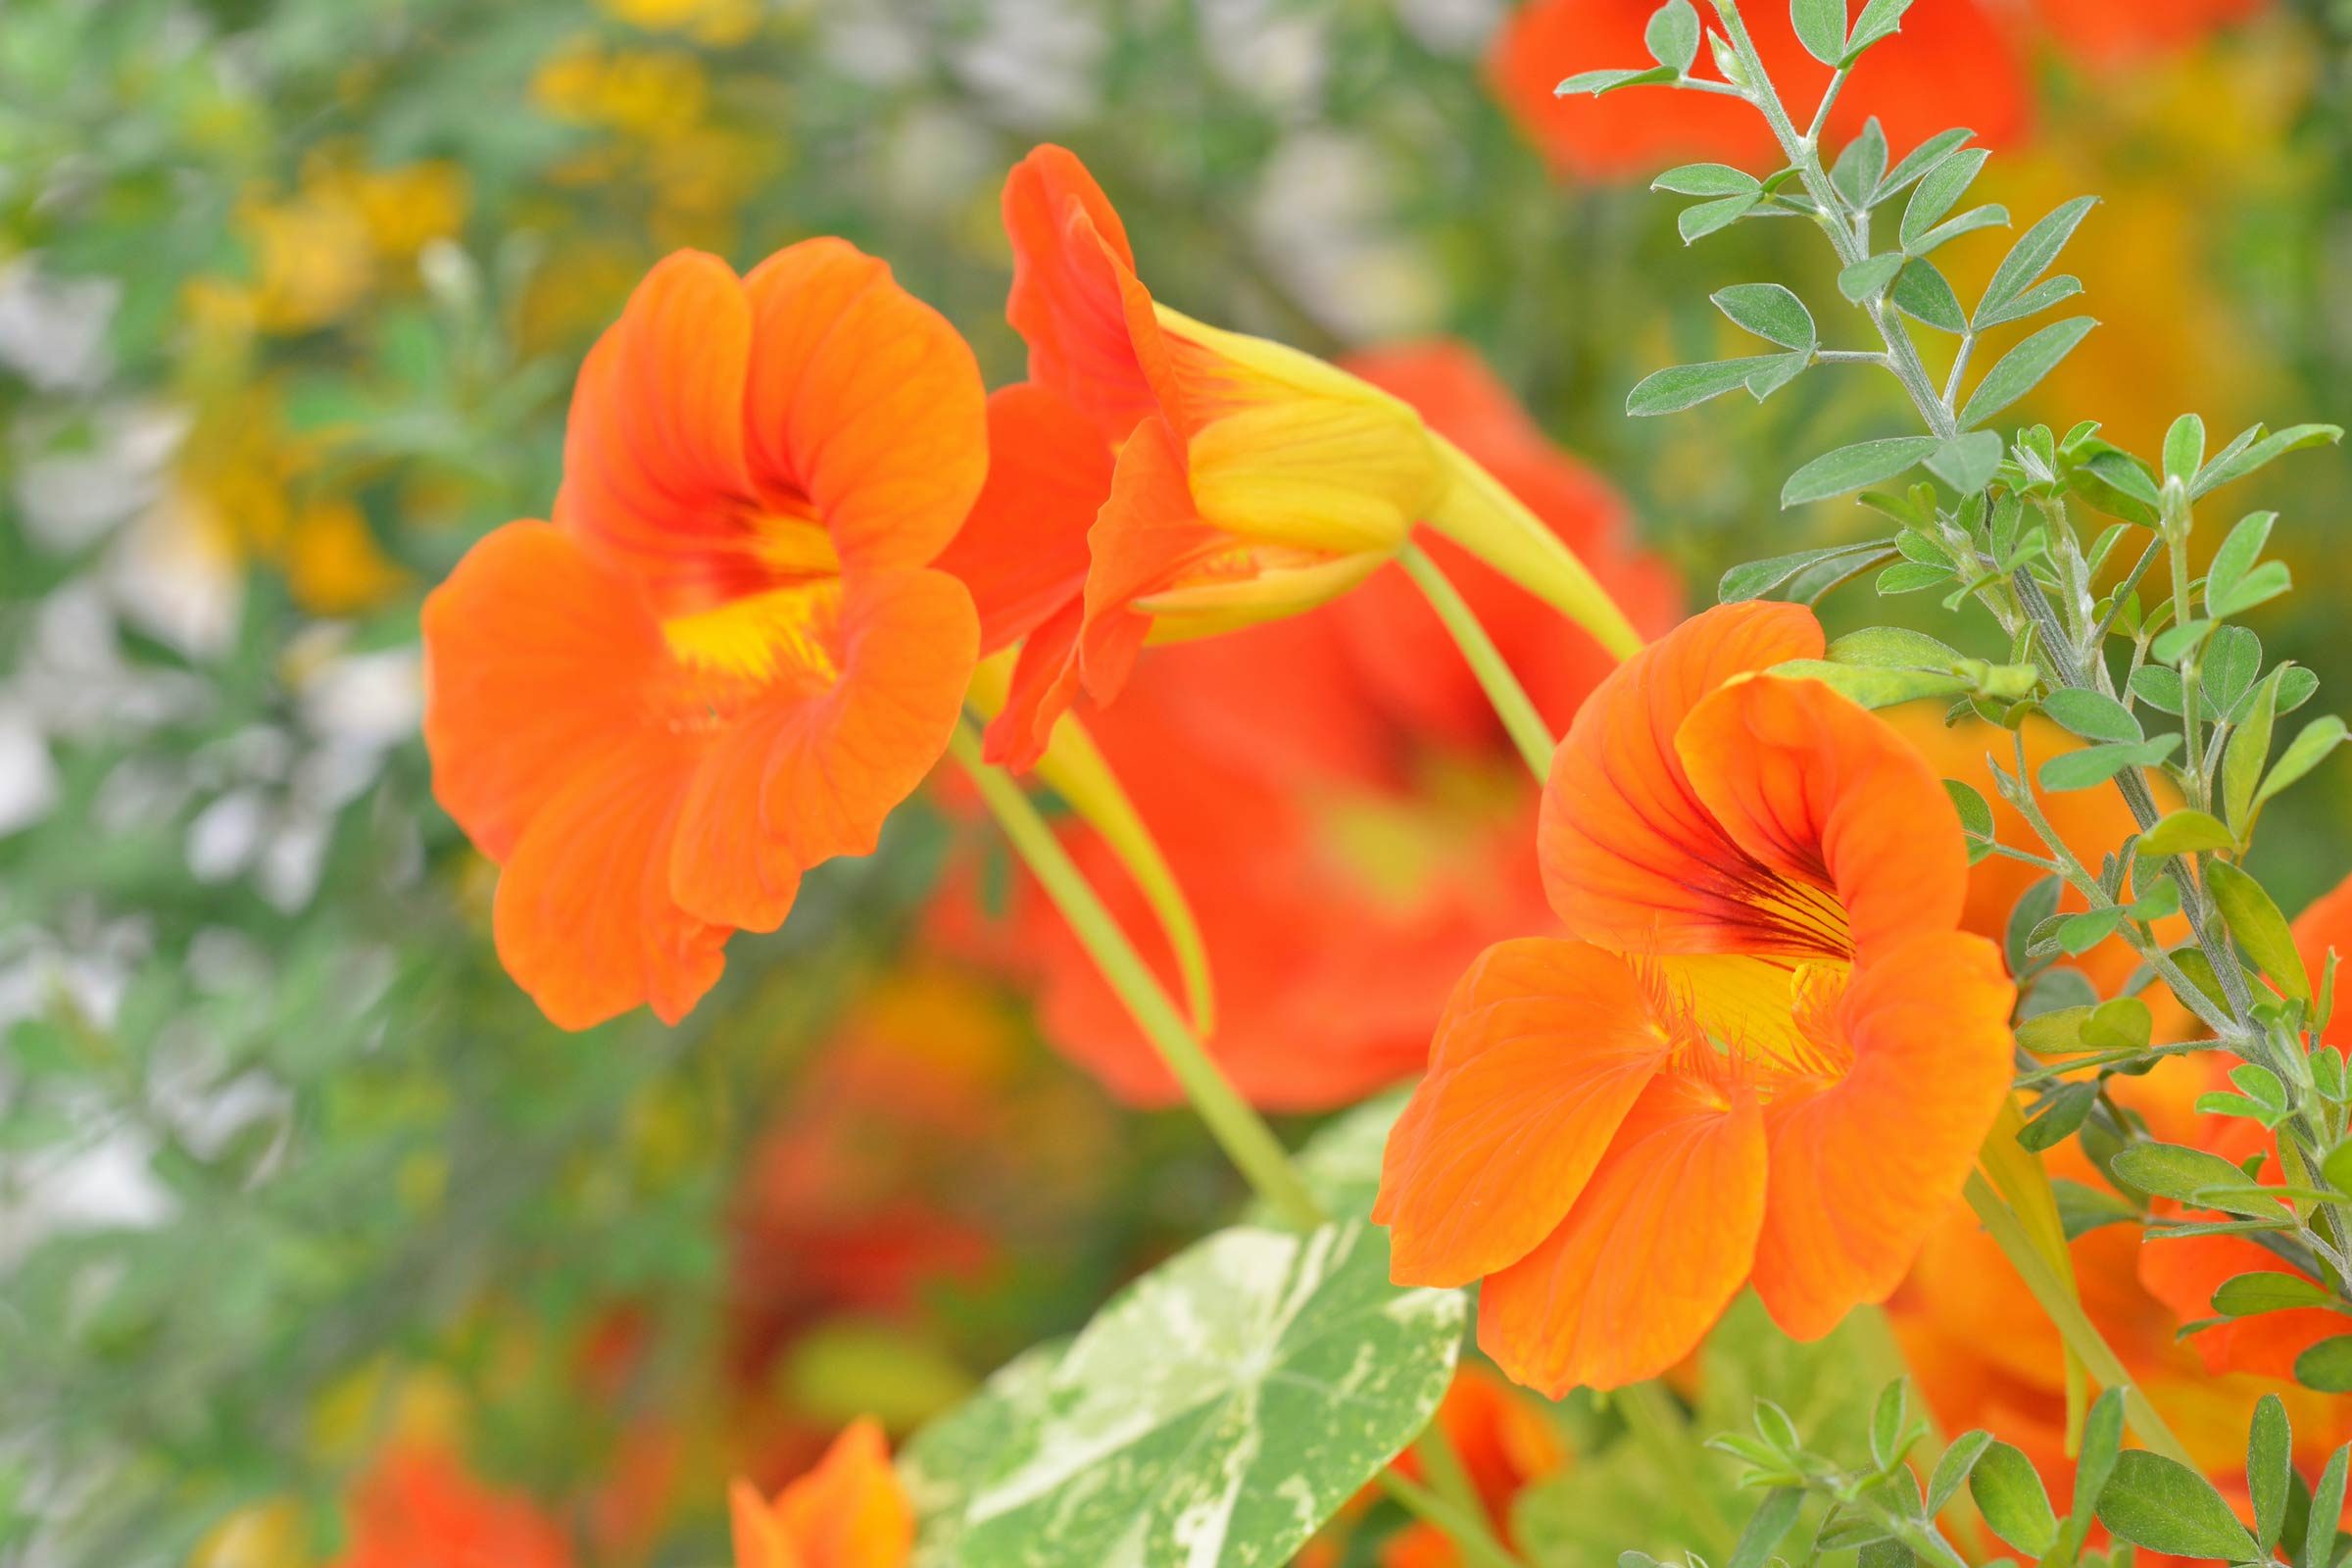 edible flowers to grow in your garden | reader's digest